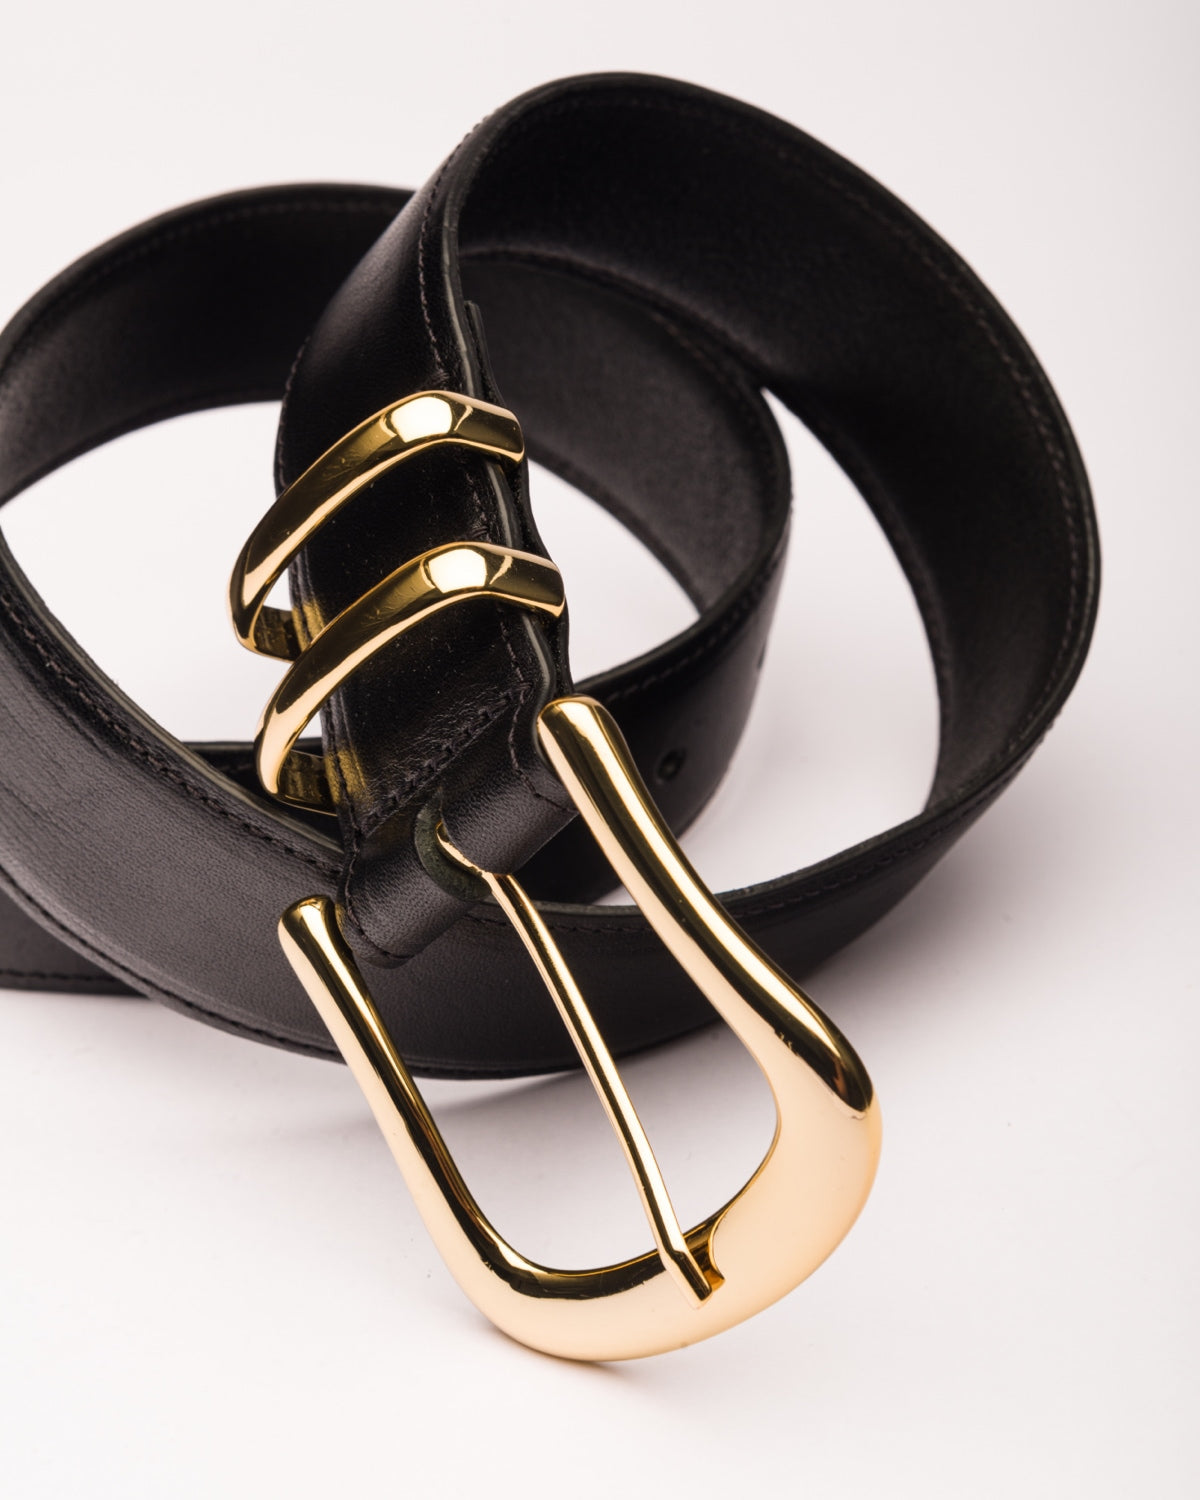 Marina black leather waist belt